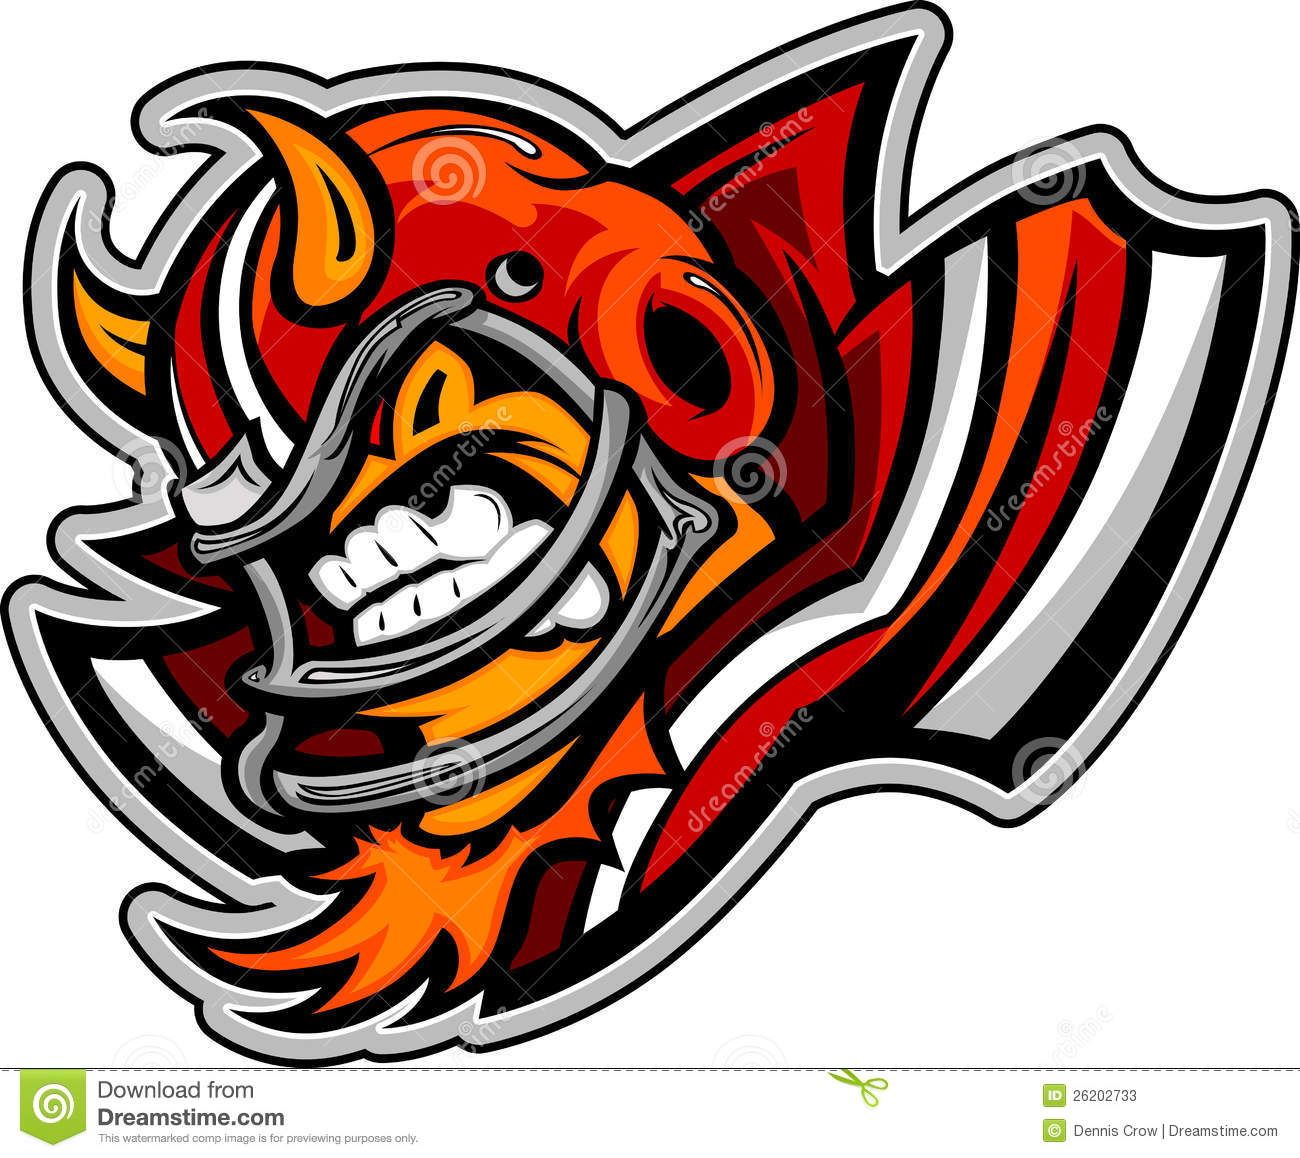 Football Devil Mascot Wearing Helmet With Horns Stock Photos   Image